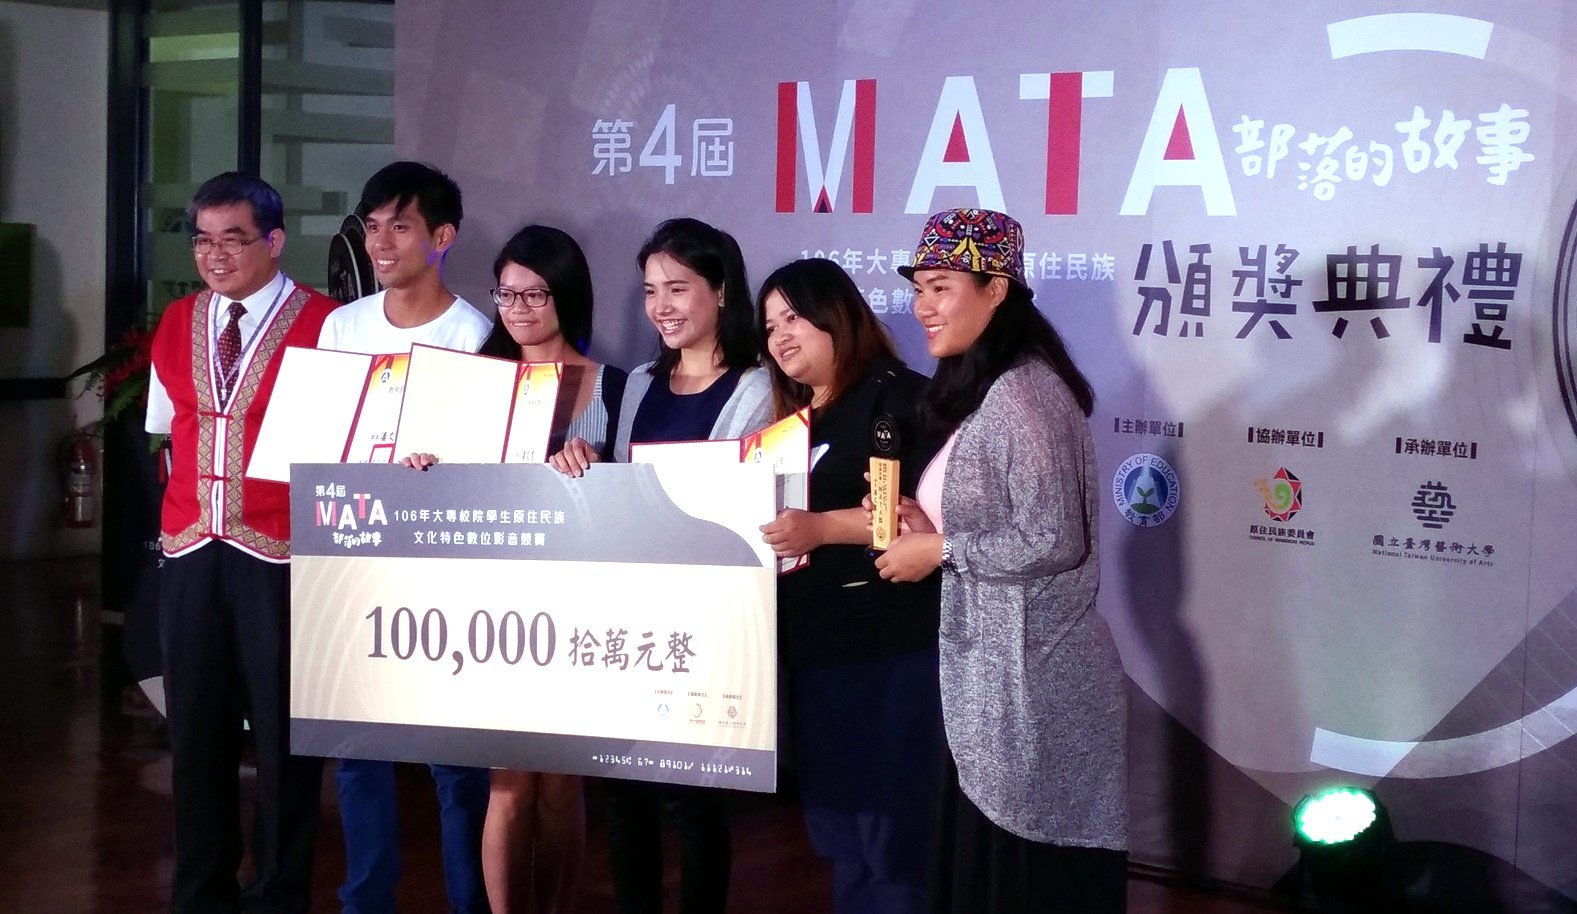 MATA影展東華大學學生獲得首獎